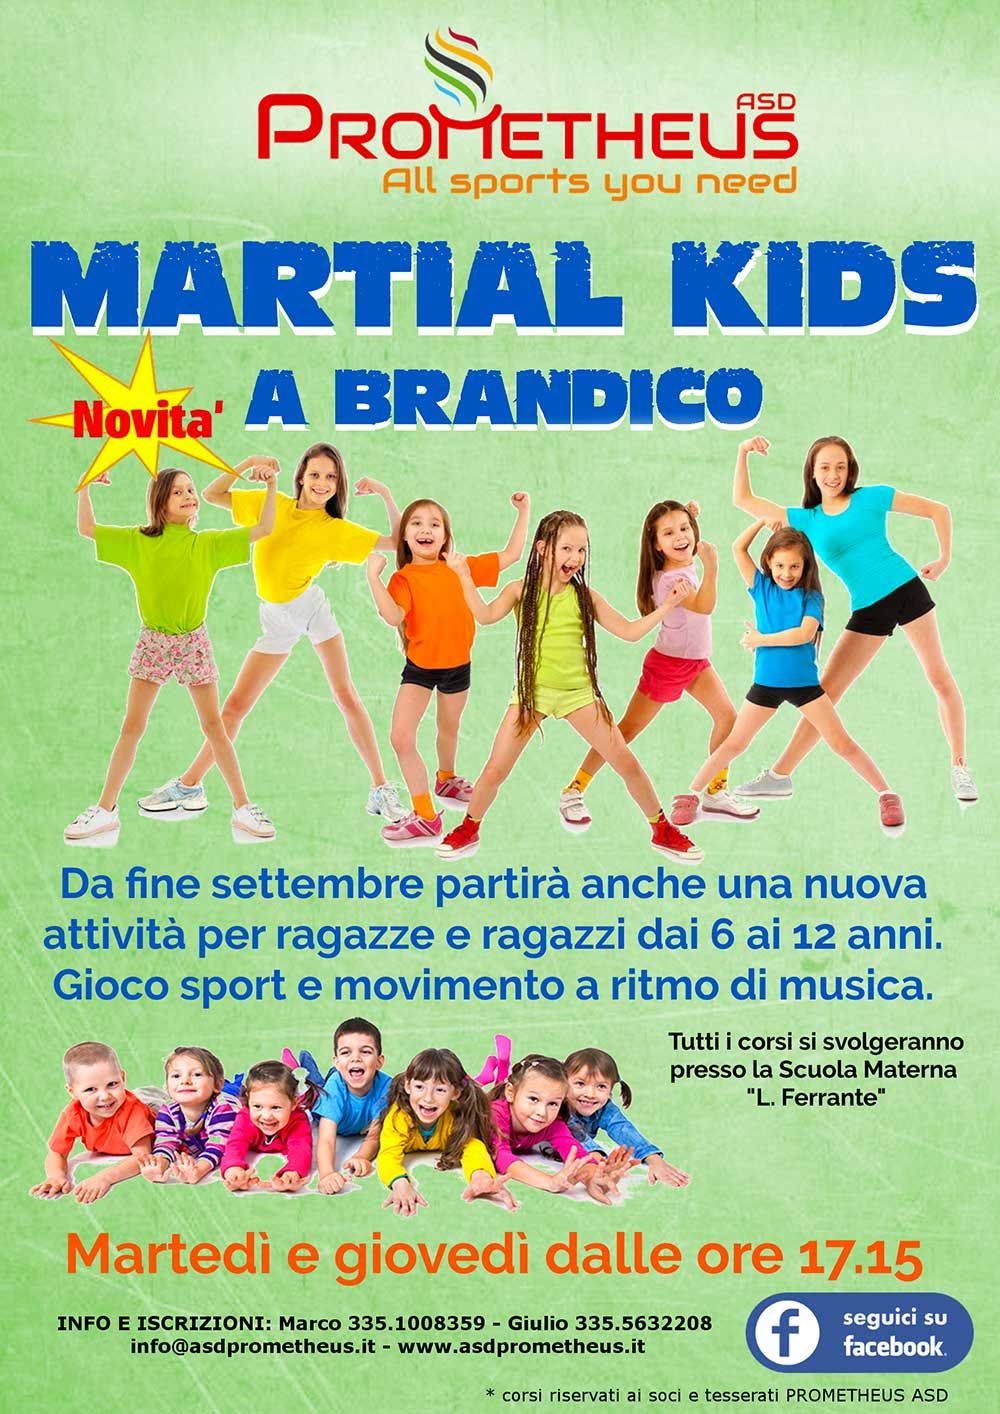 martial-kids-brandico-prometheus-2019